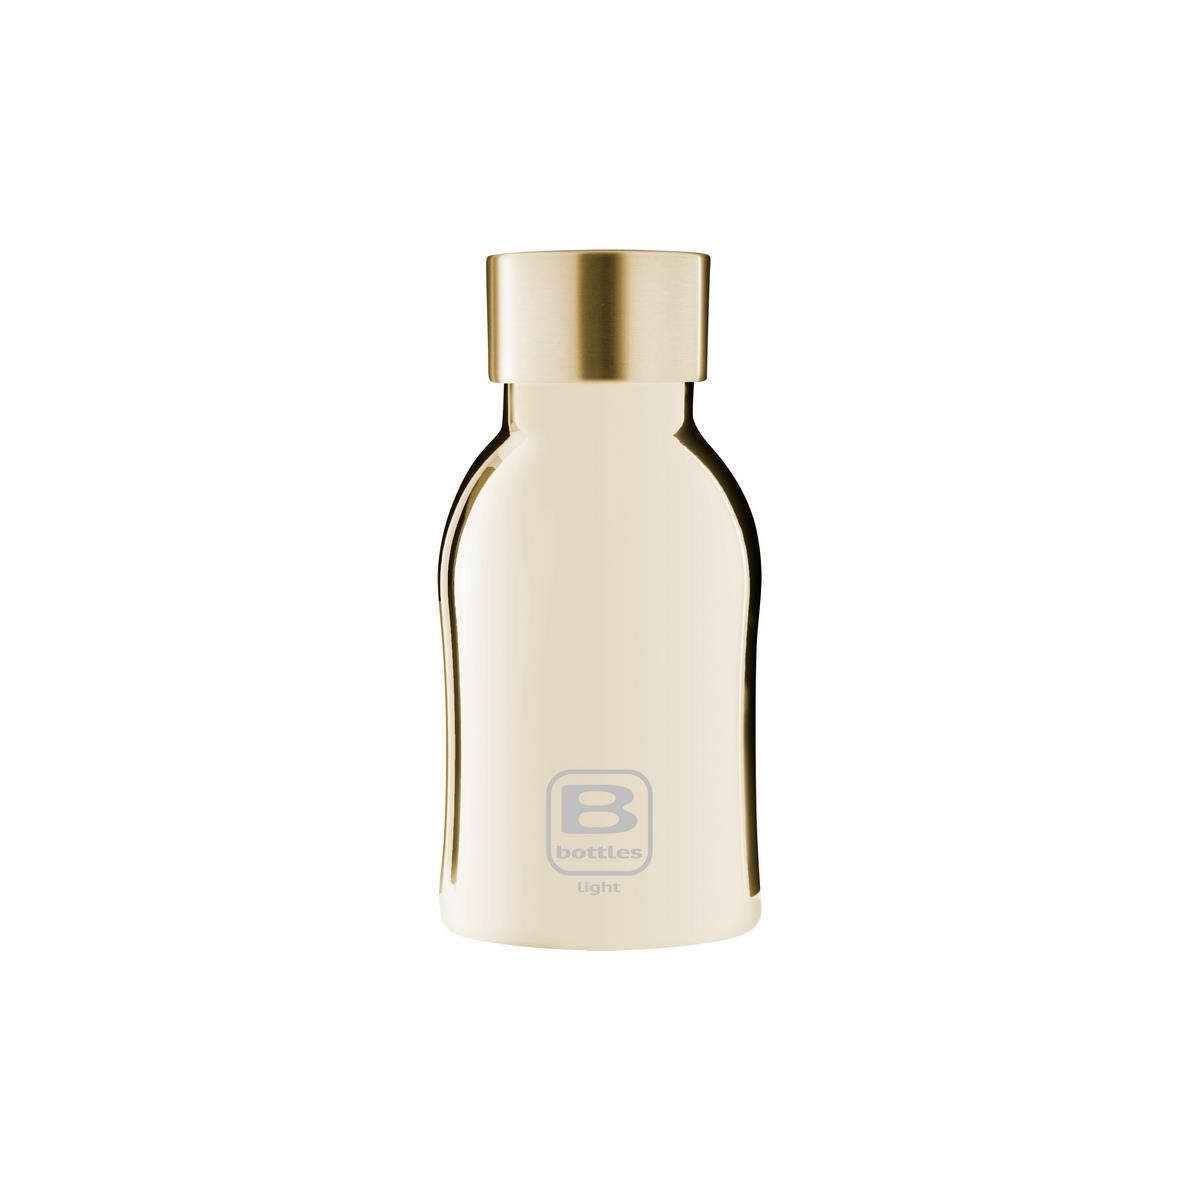 B Bottles Light - Yellow Gold Lux ??- 350 ml - Stainless steel bottle 18/10 stainless steel, ultra